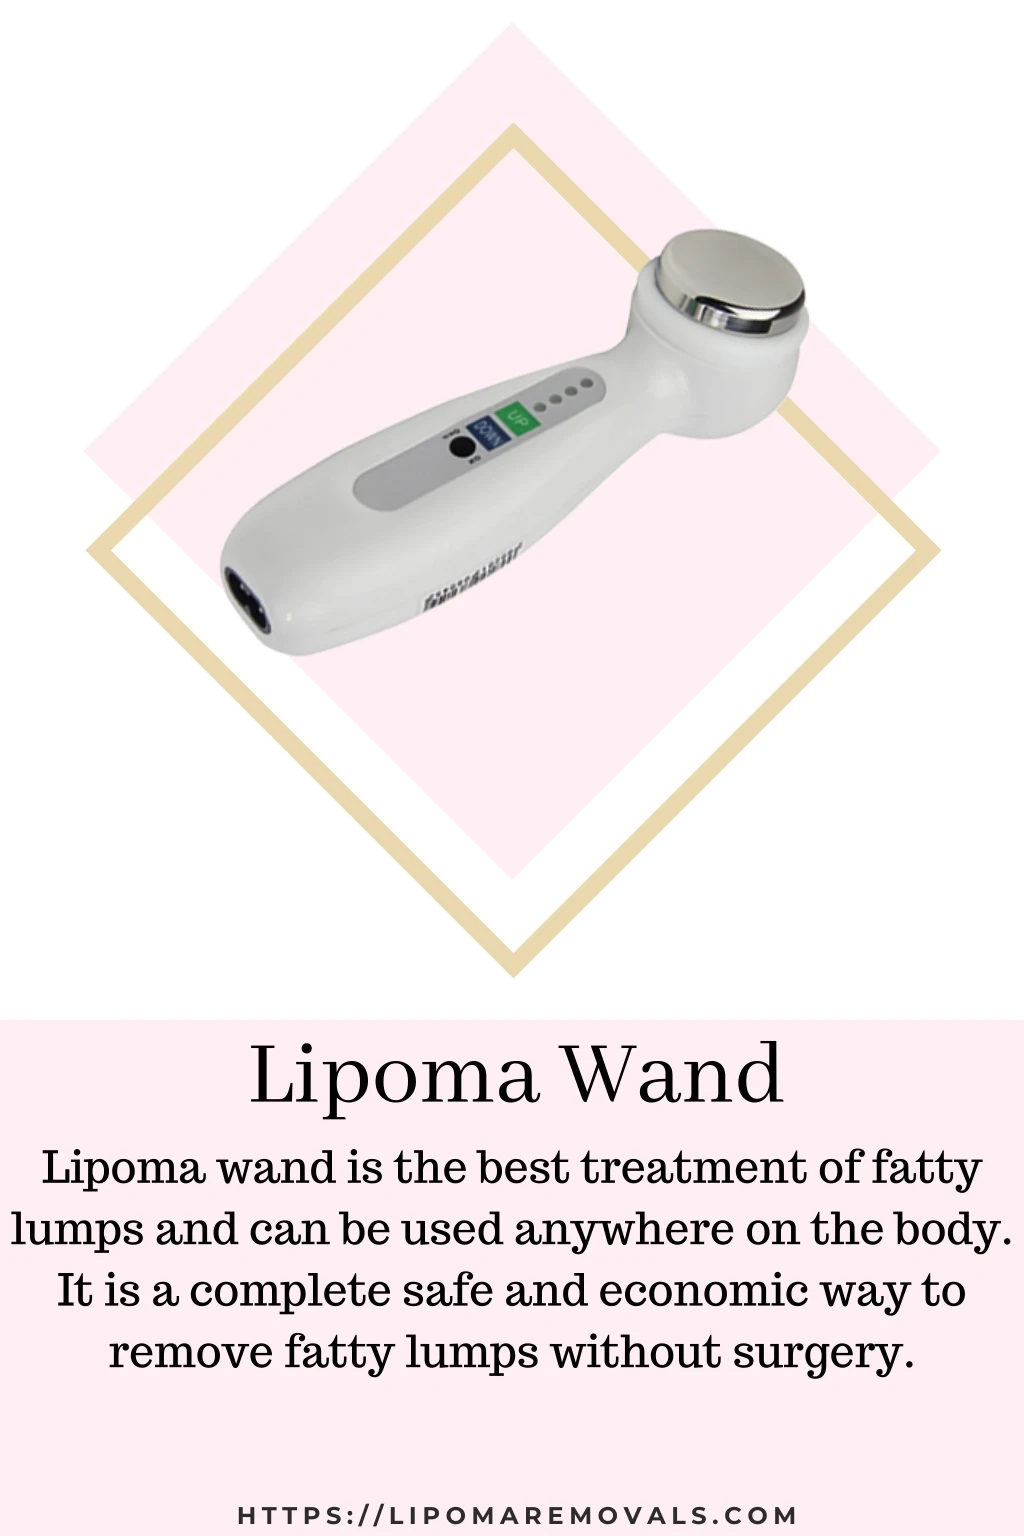 lipoma wand lipoma wand is the best treatment